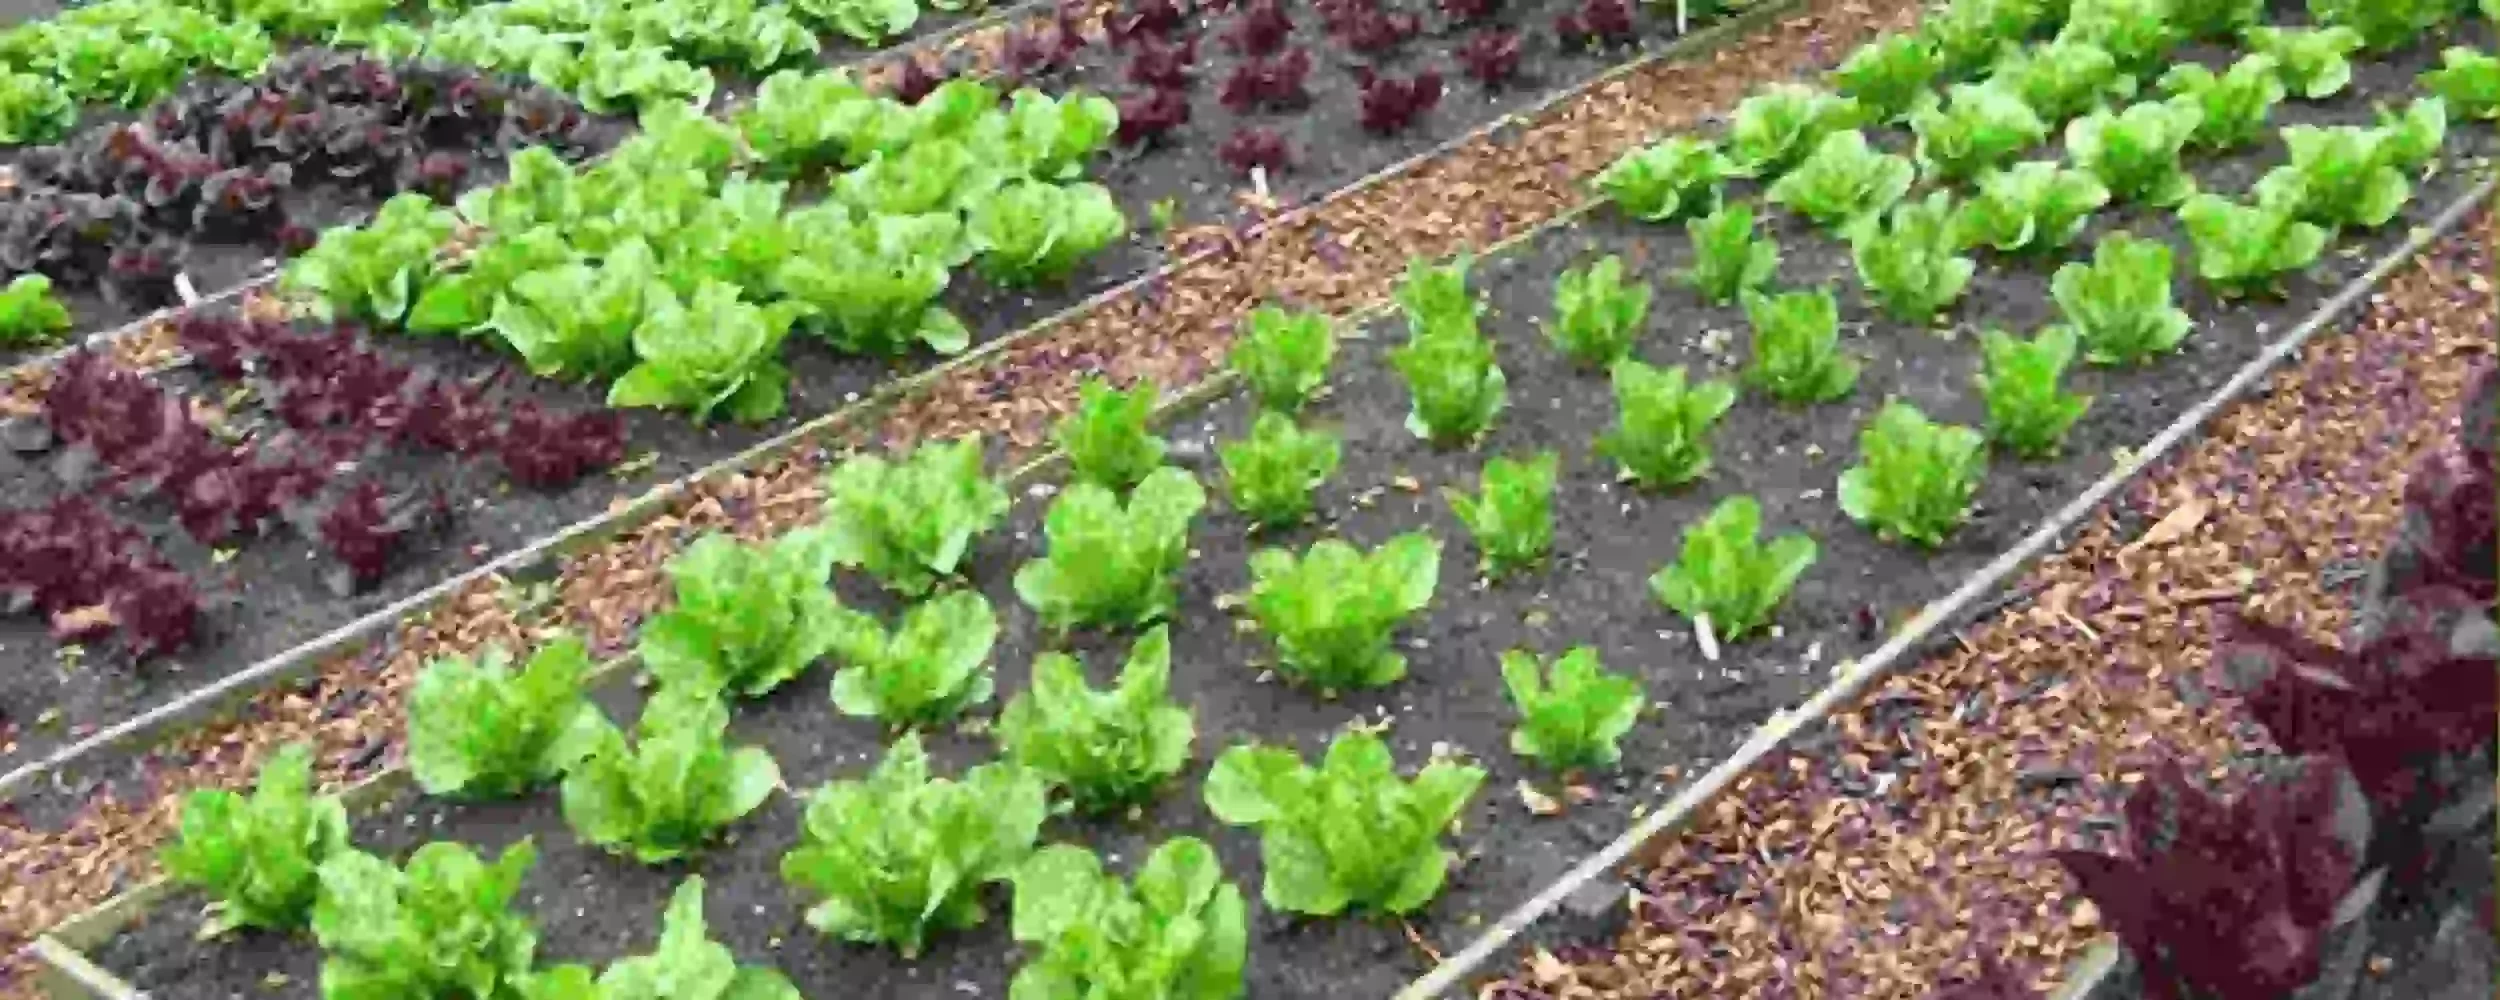 Growing Organic Produce